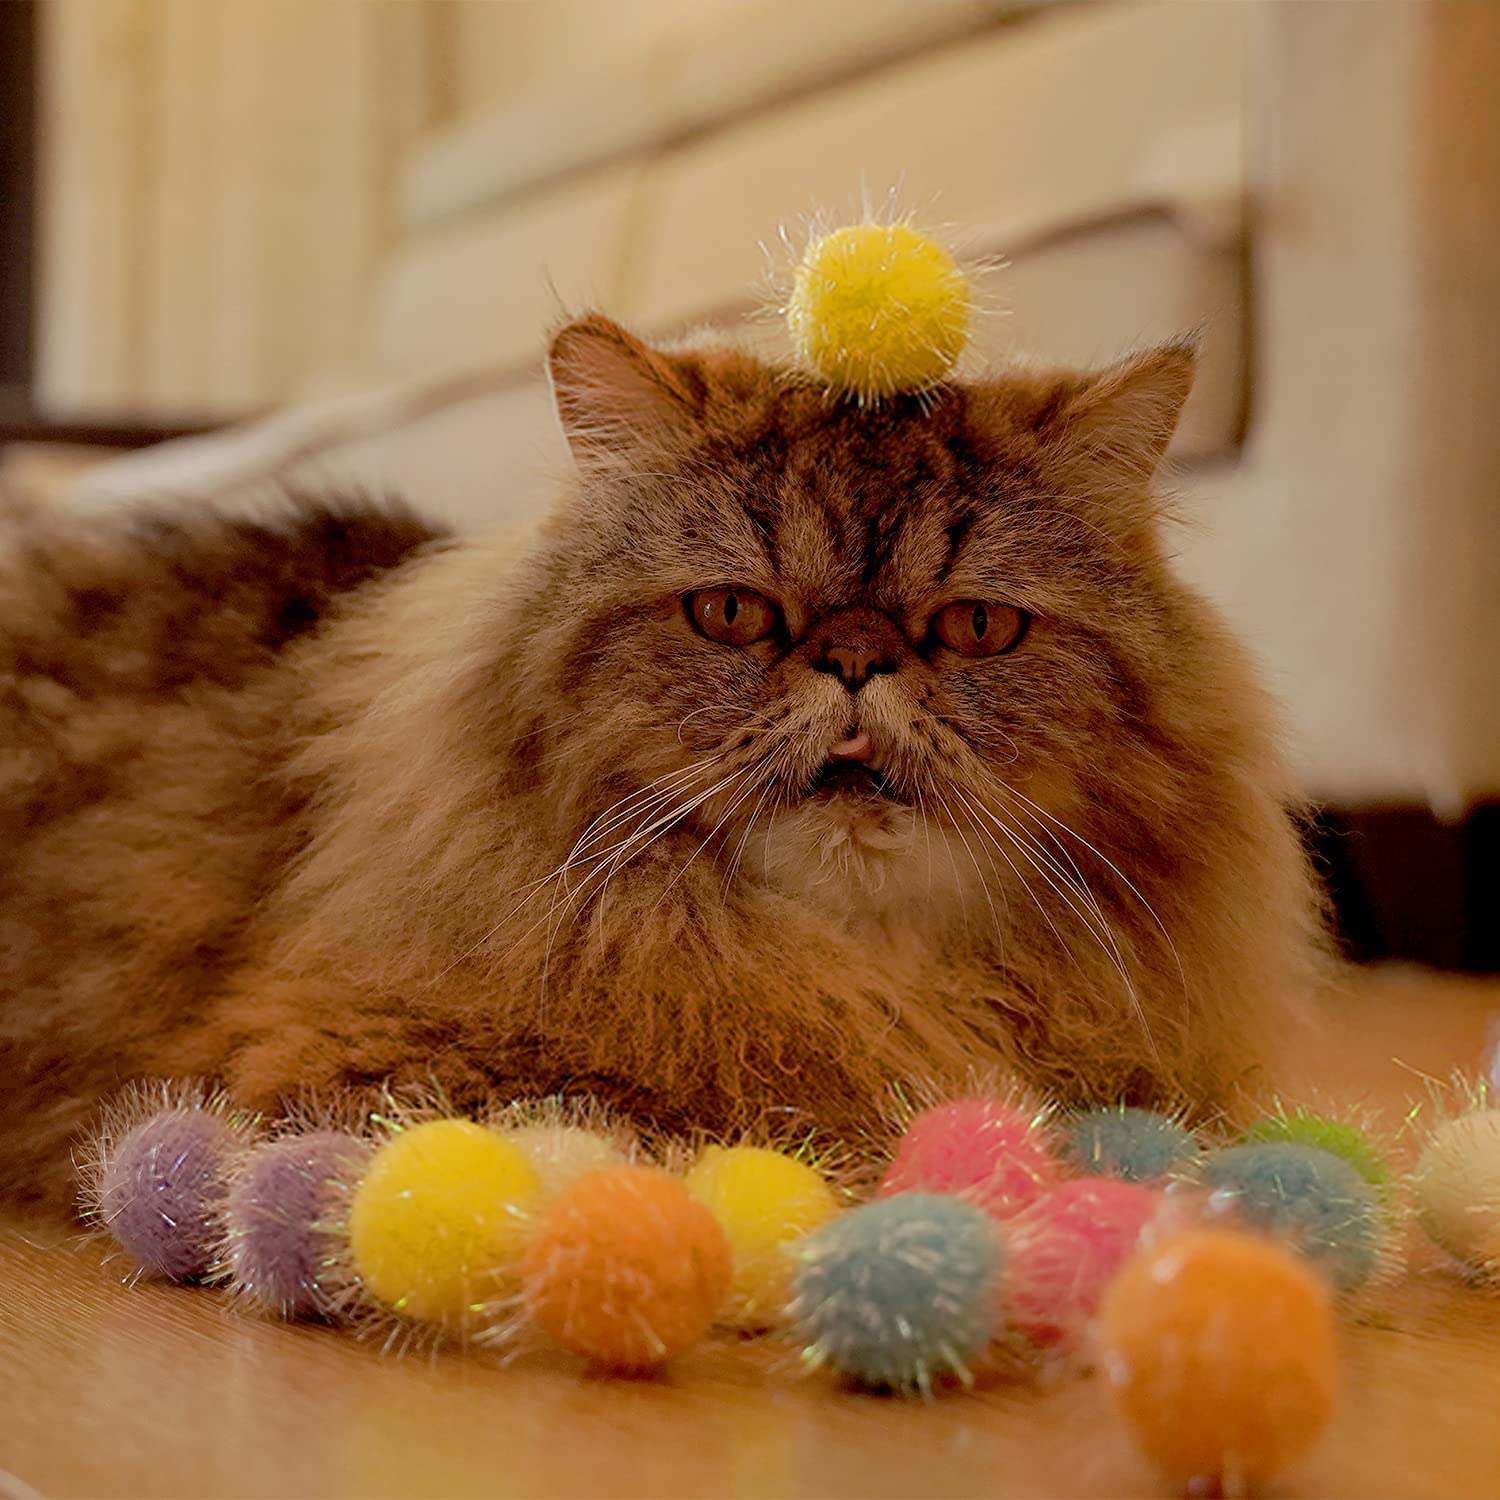  RIMOBUL 20PCS 1.5INCH Extra Large Cat's Favorite Chase Glitter  Ball Toy Sparkle Pom Pom Balls : Pet Supplies